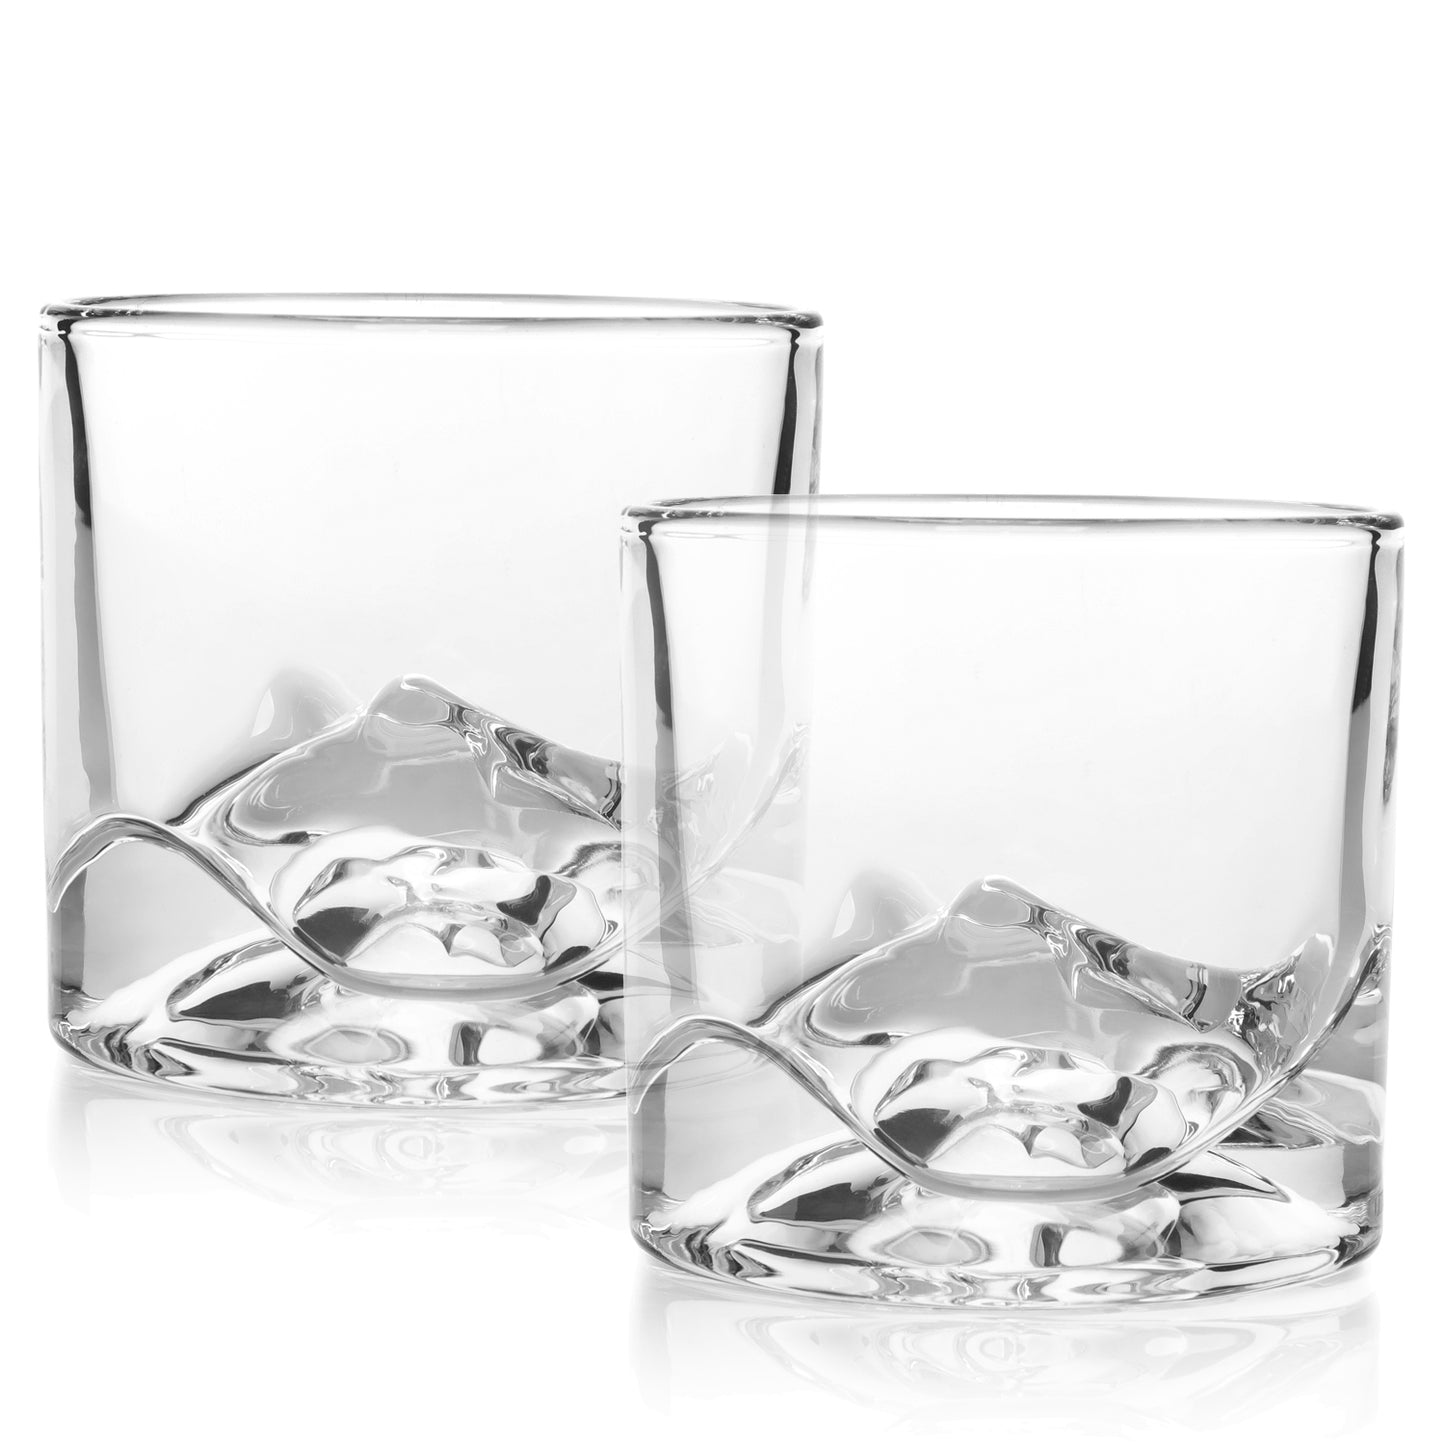 Denali Crystal Whiskey Glasses Set of 2